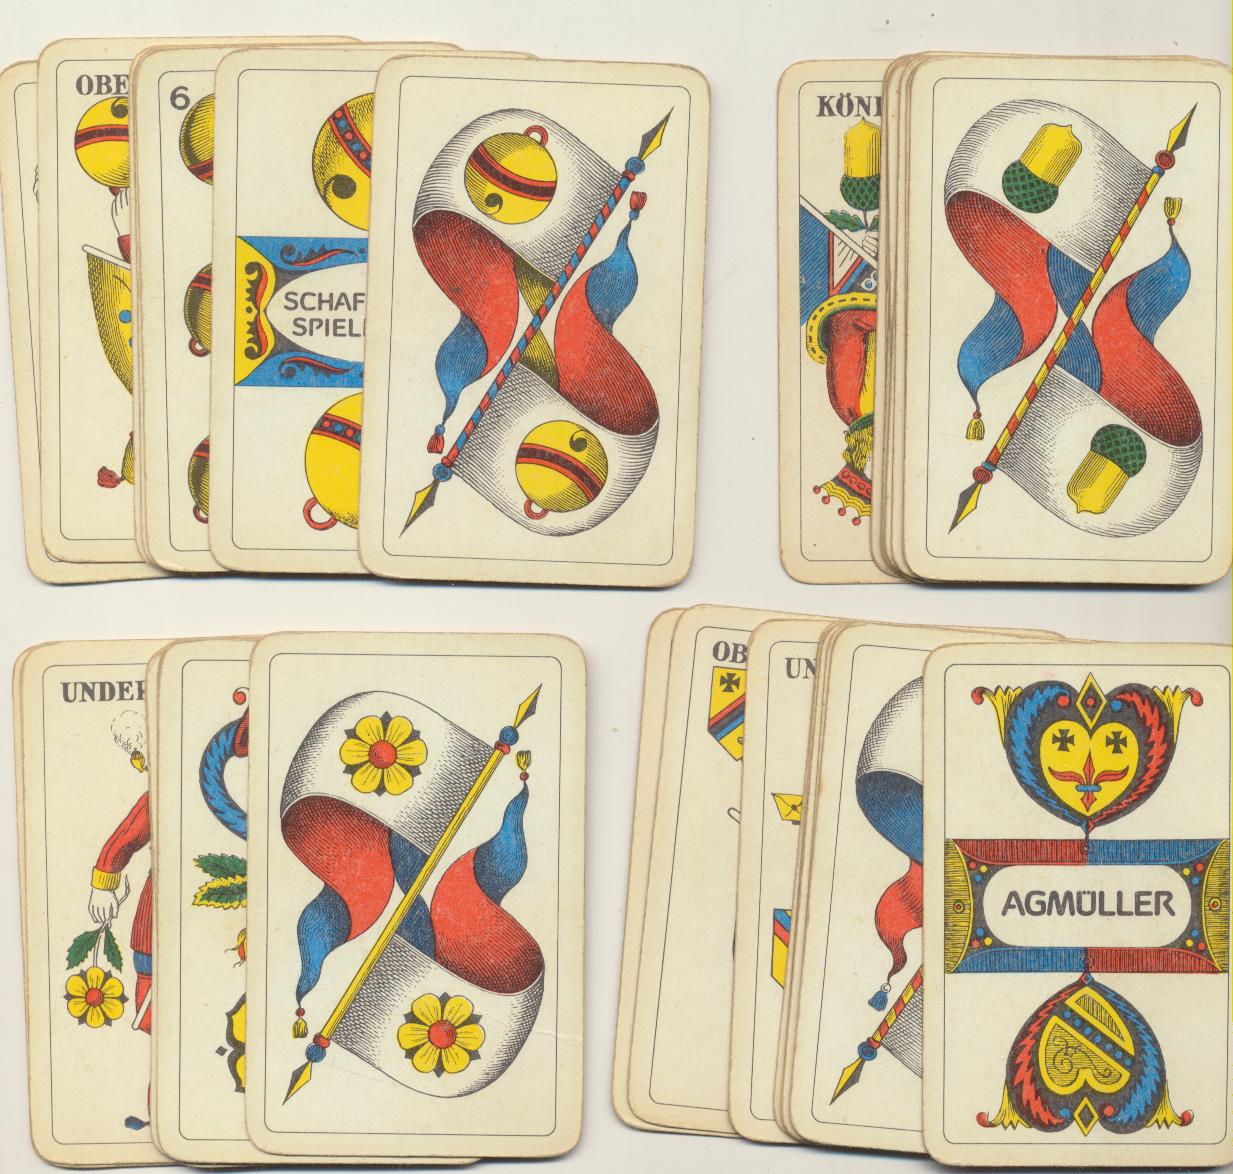 Baraja Schaffhauser Spielkarten. Baraja de 36 cartas Completa. AGMULLER. MUY DIFÍCIL